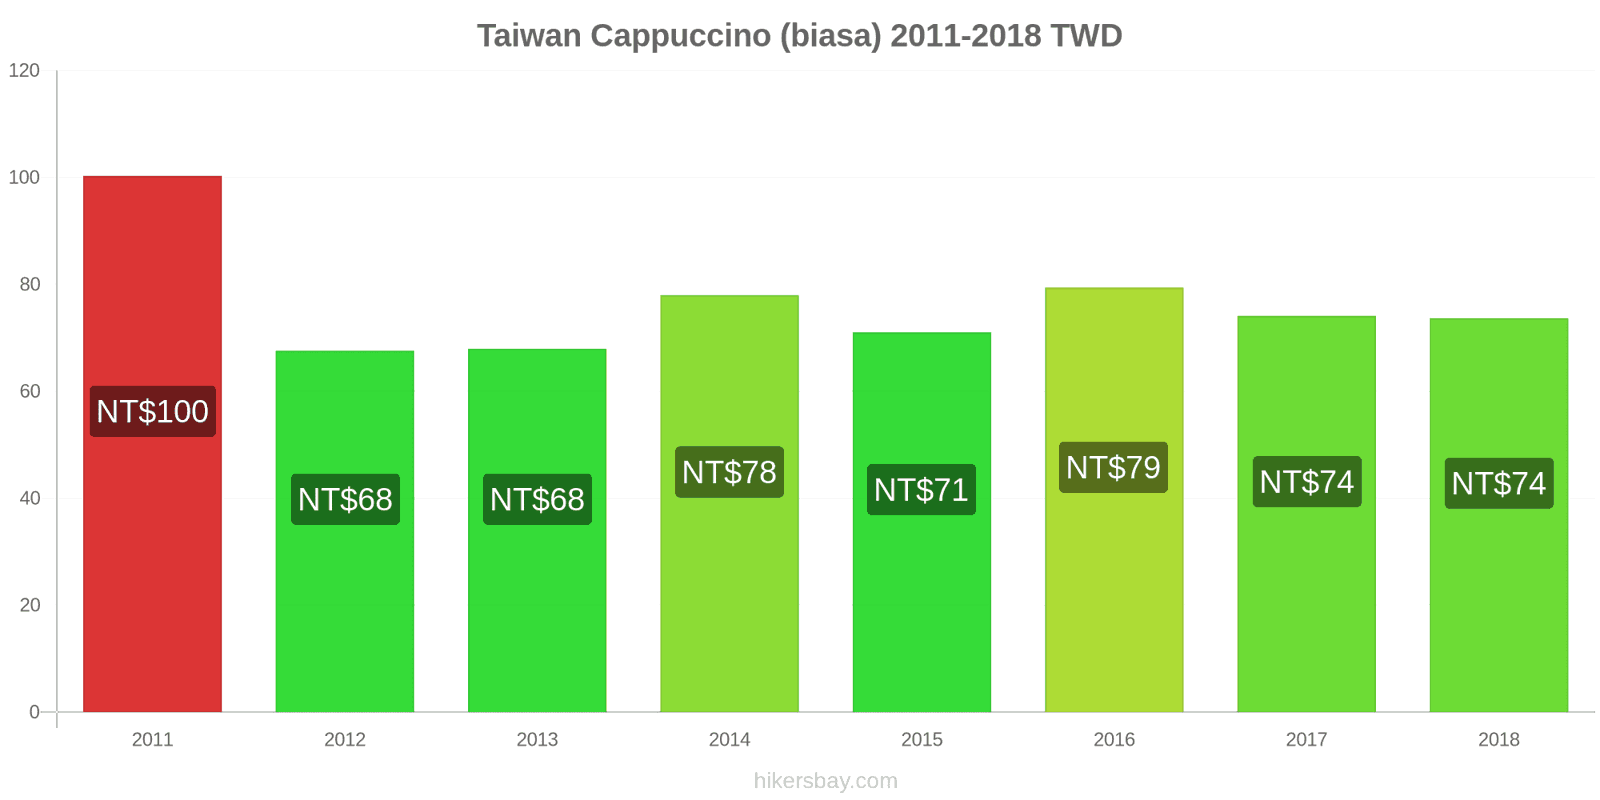 Taiwan perubahan harga Cappuccino hikersbay.com